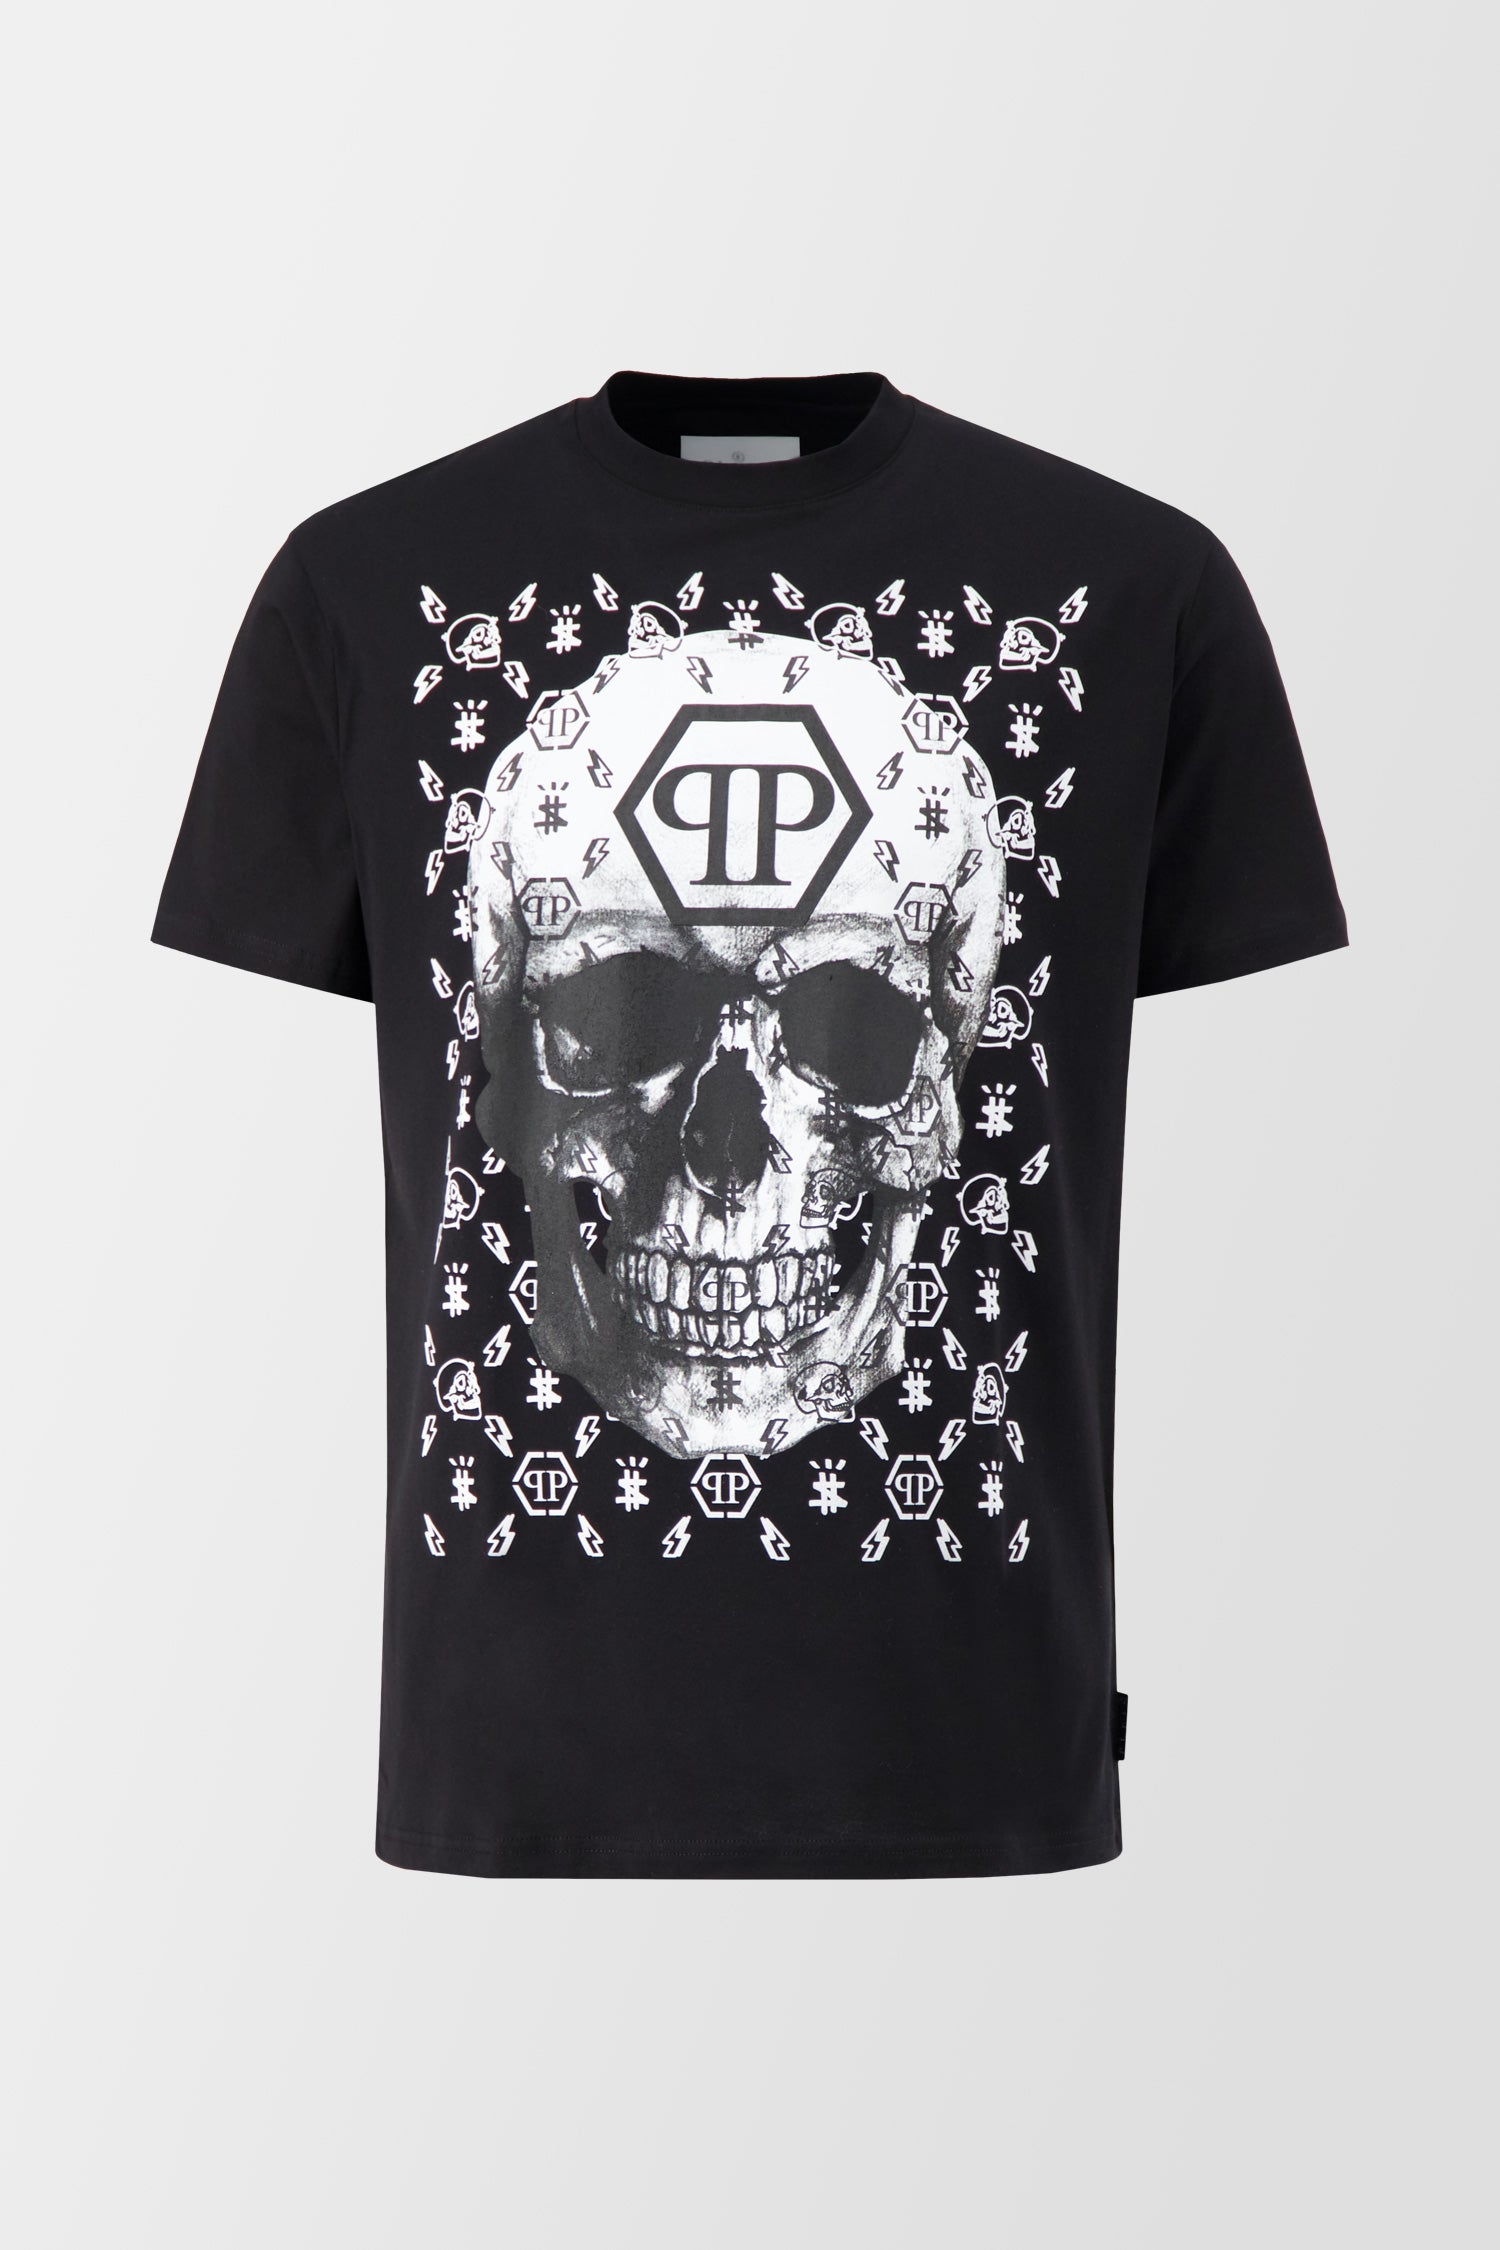 Philipp Plein Black SS Skull Round Neck T-Shirt